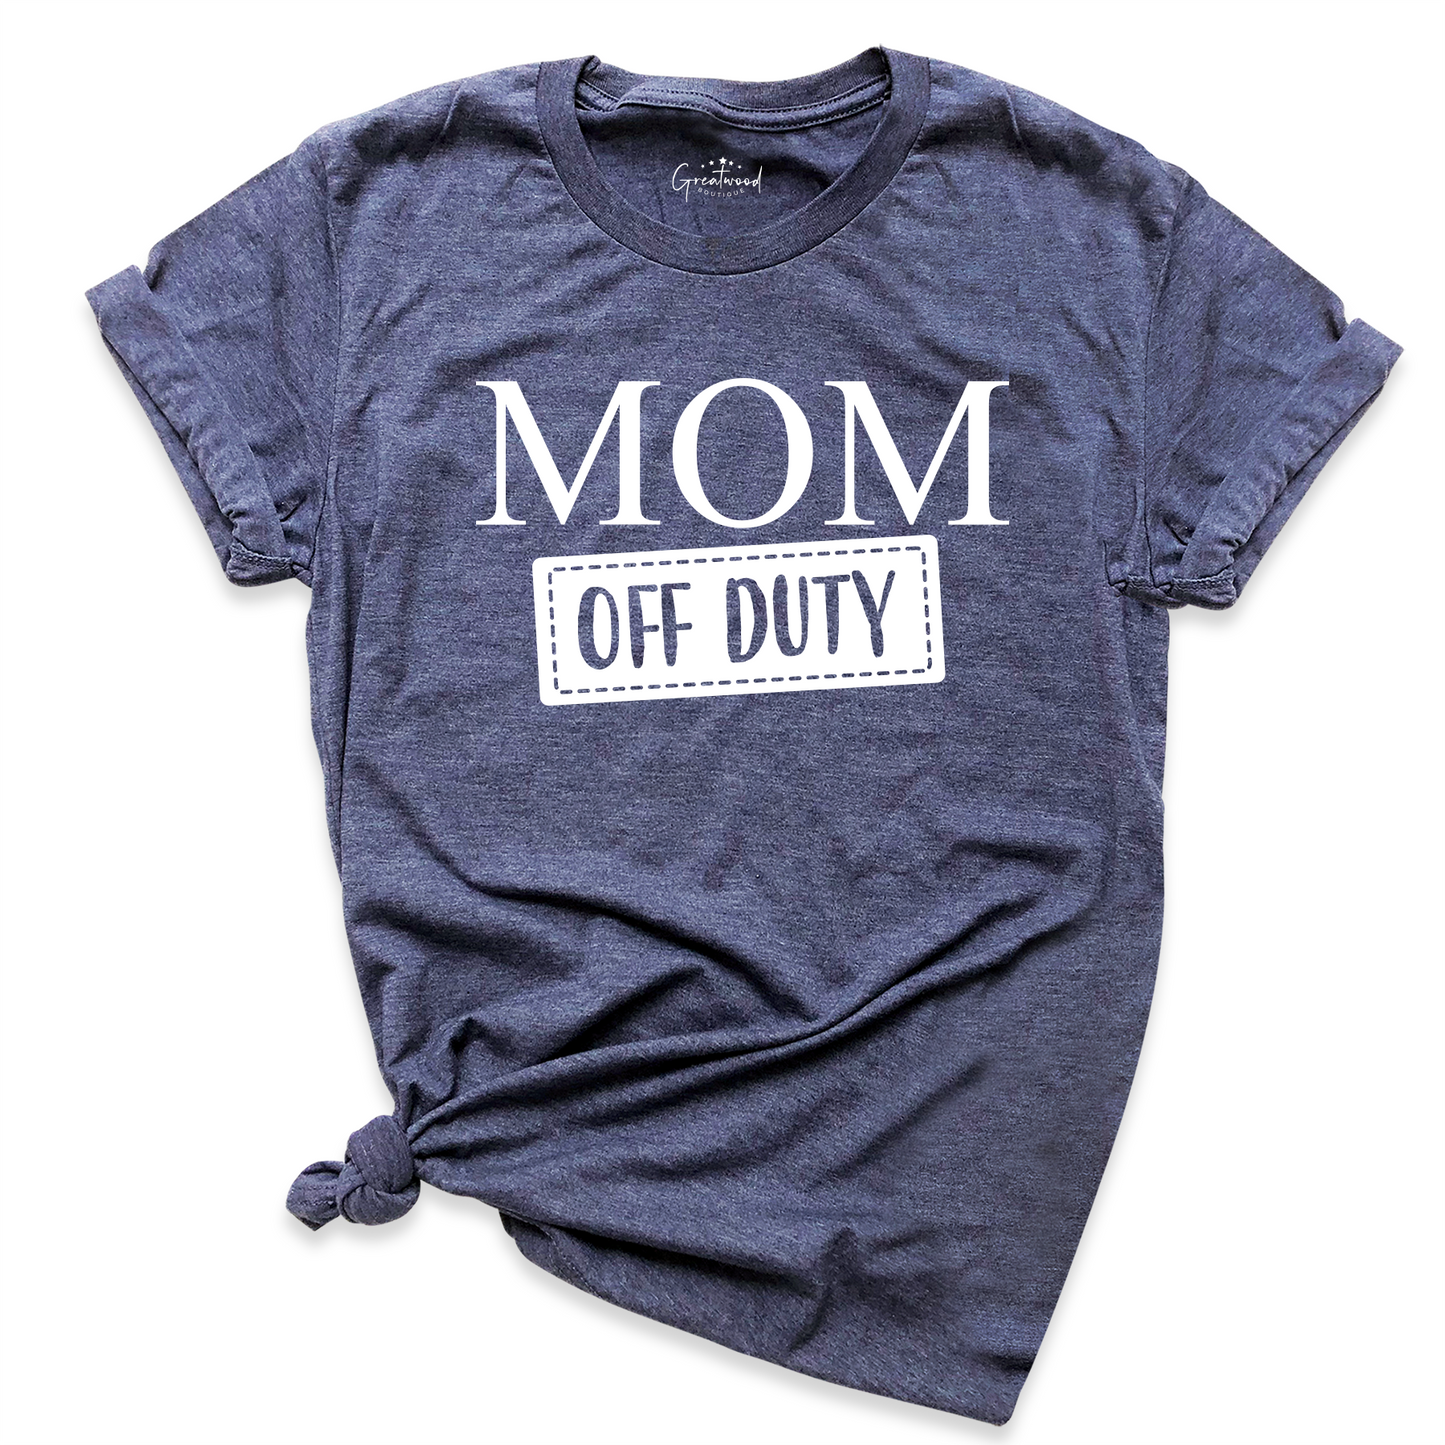 Mom Off Duty Shirt